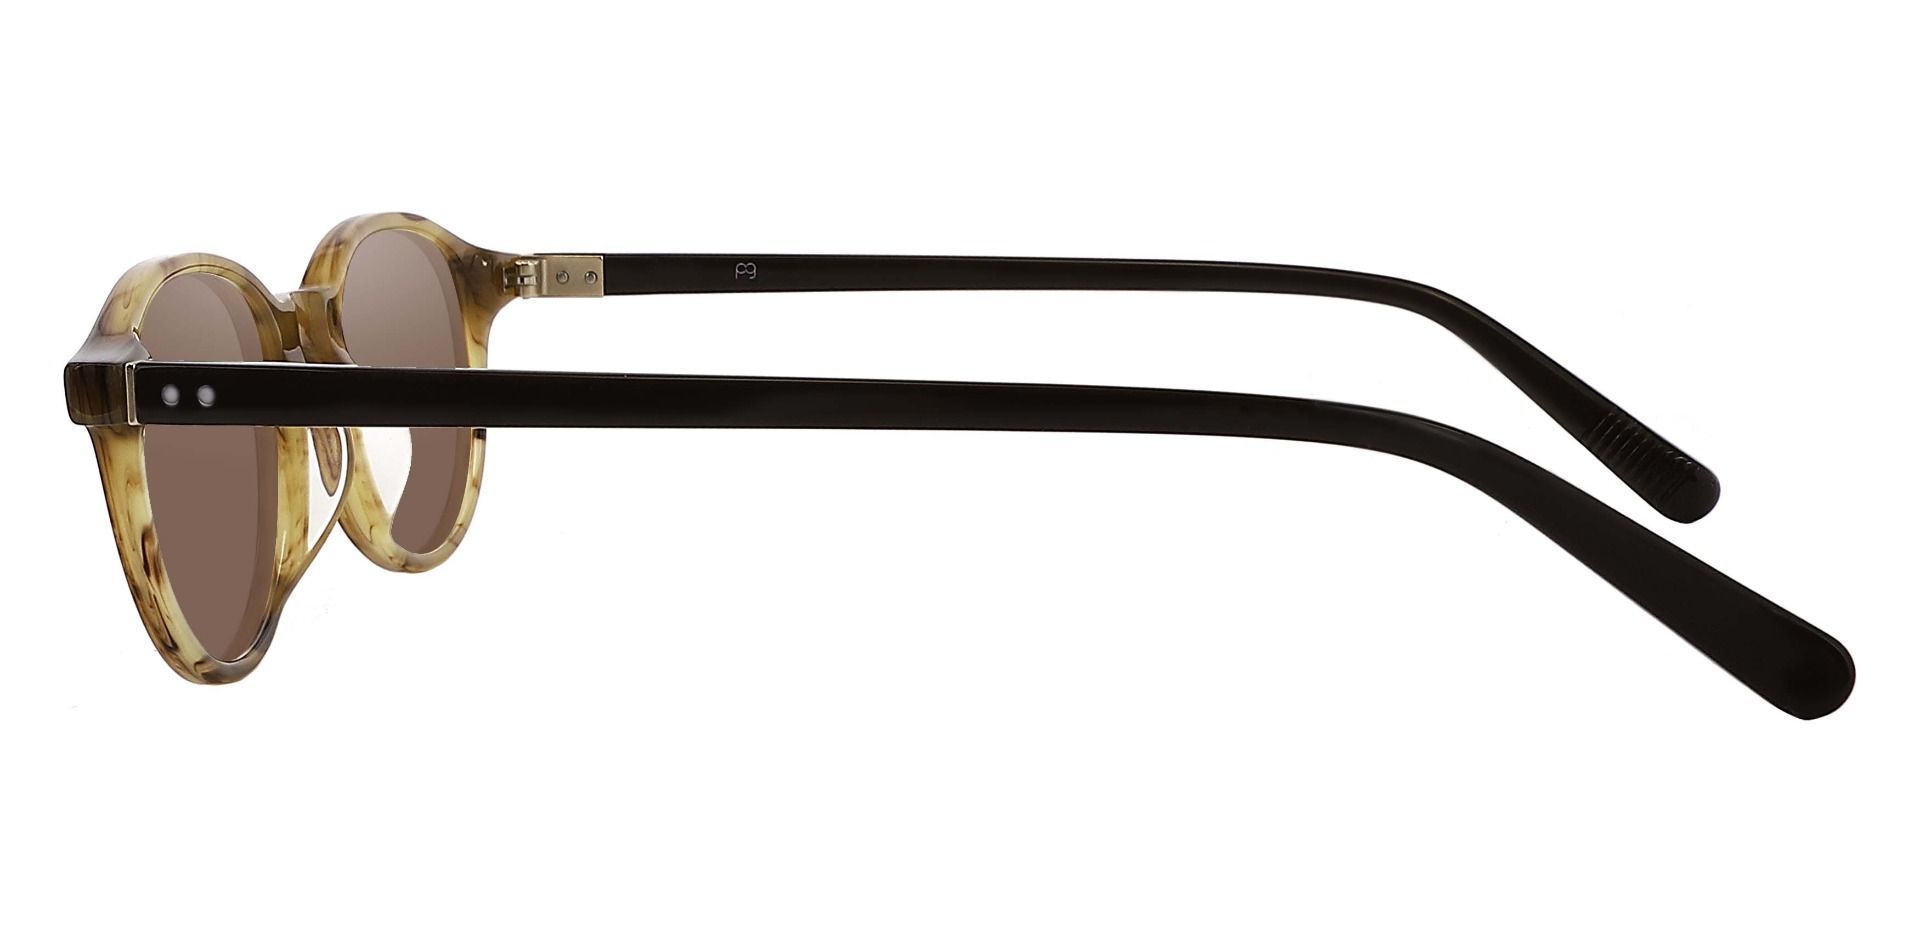 Avon Oval Progressive Sunglasses - Brown Frame With Brown Lenses